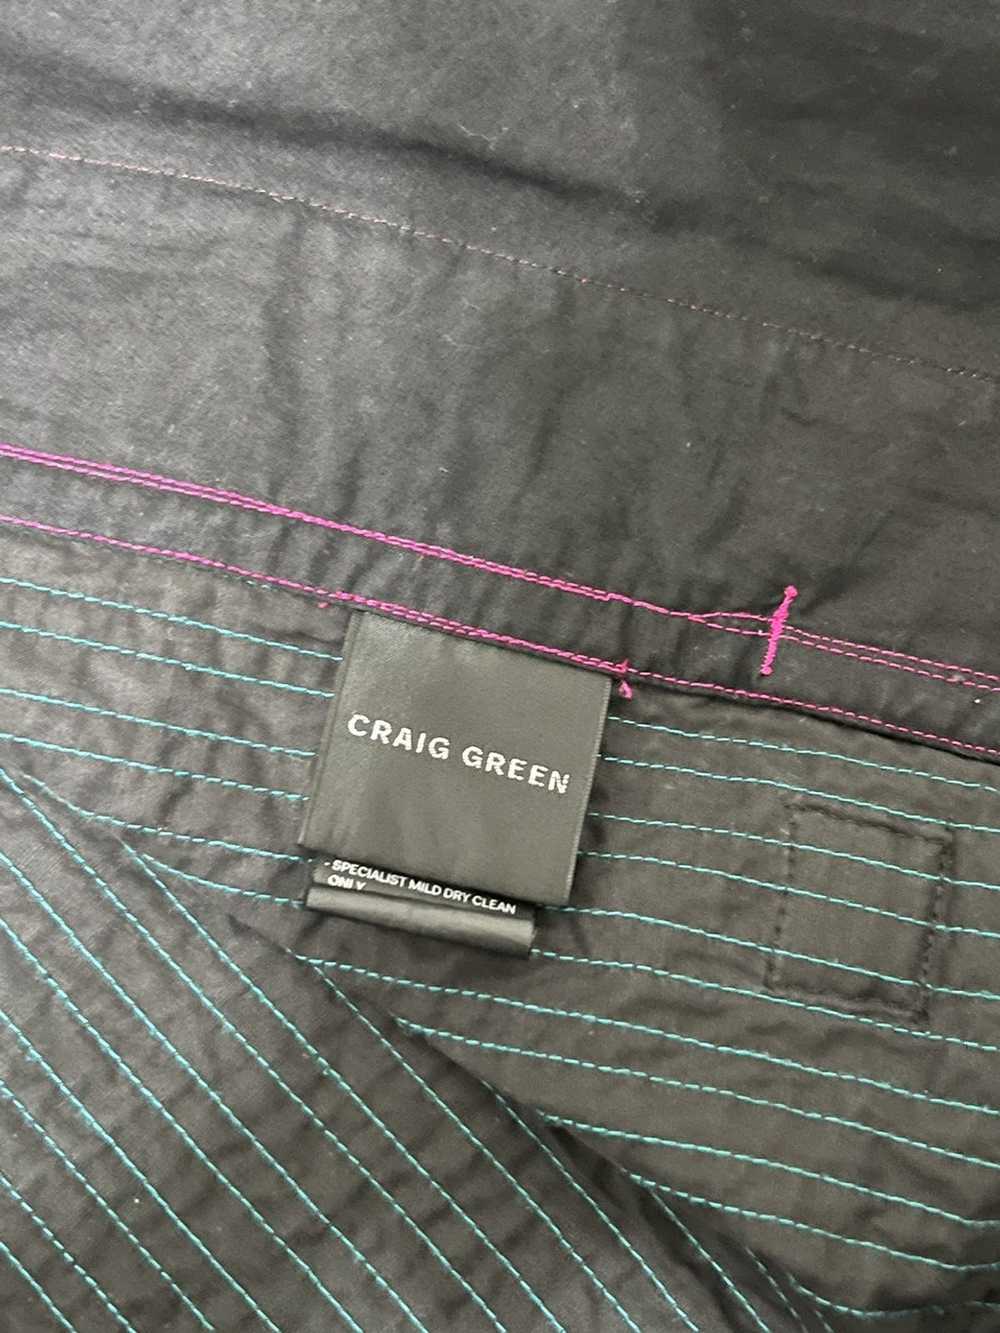 Craig Green S/S 2019 Vibrating Jacket - image 7